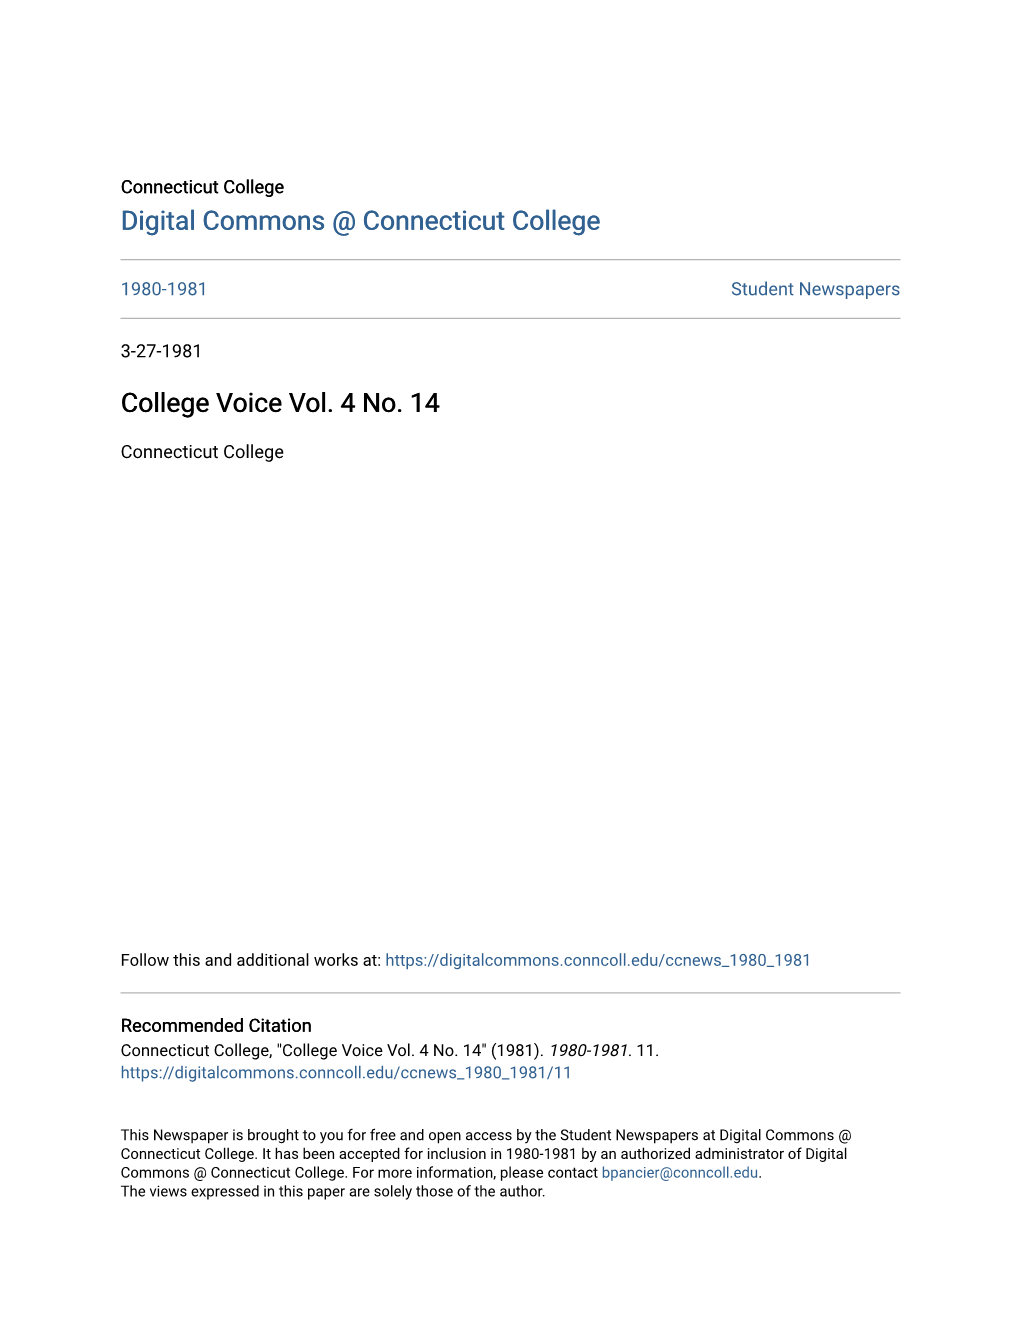 College Voice Vol. 4 No. 14